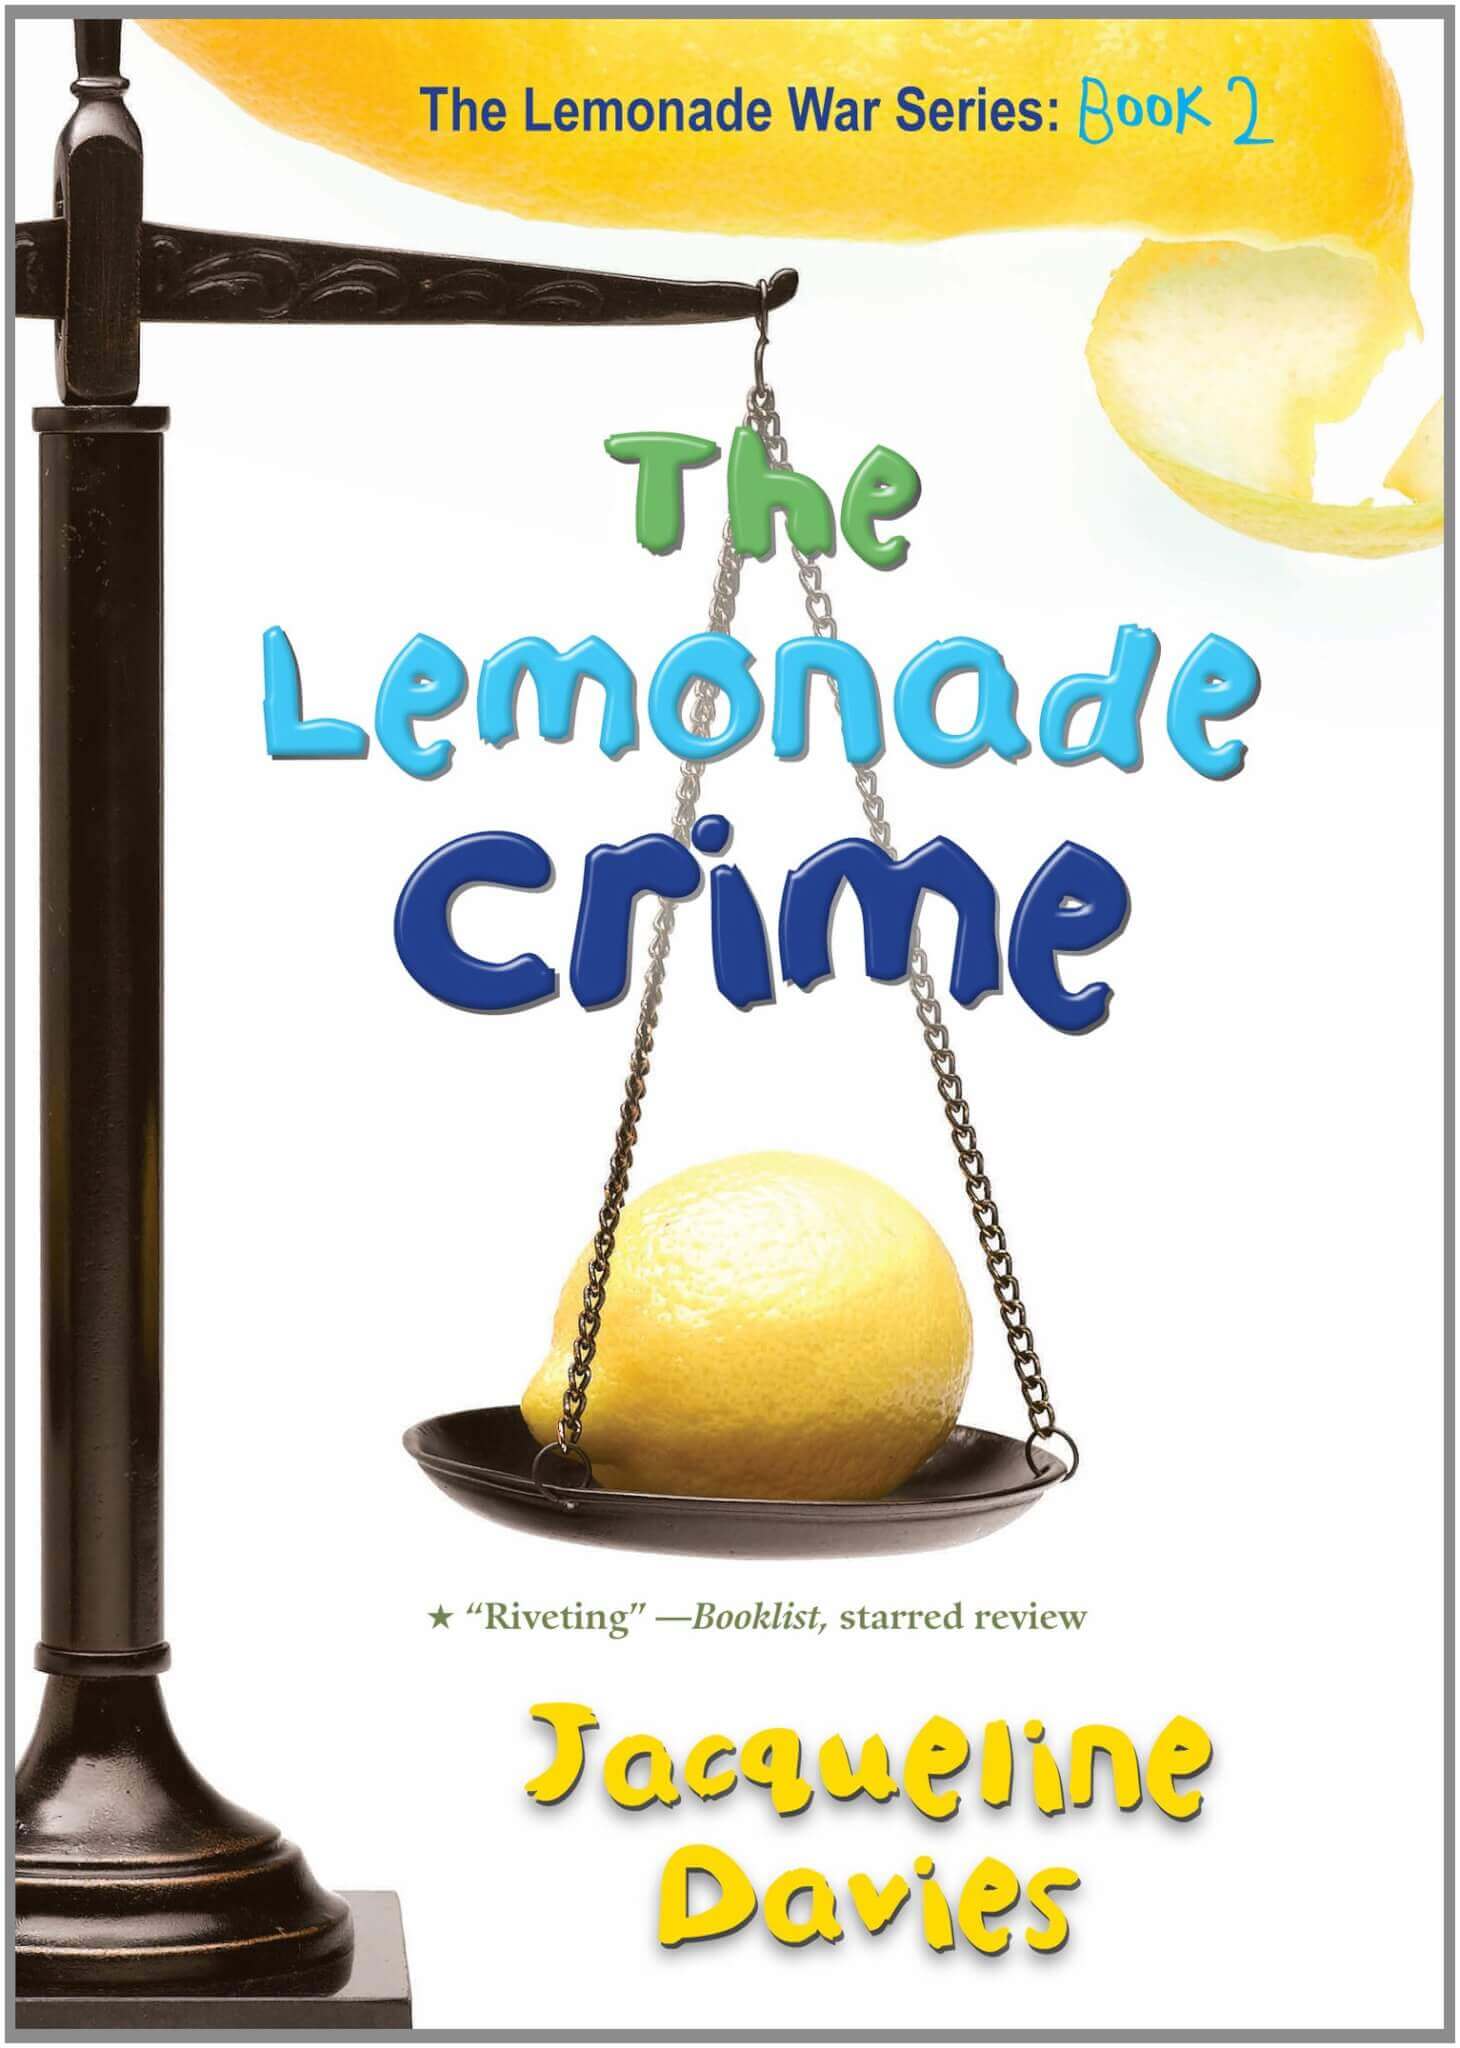 One School, One Book - The Lemonade Crime